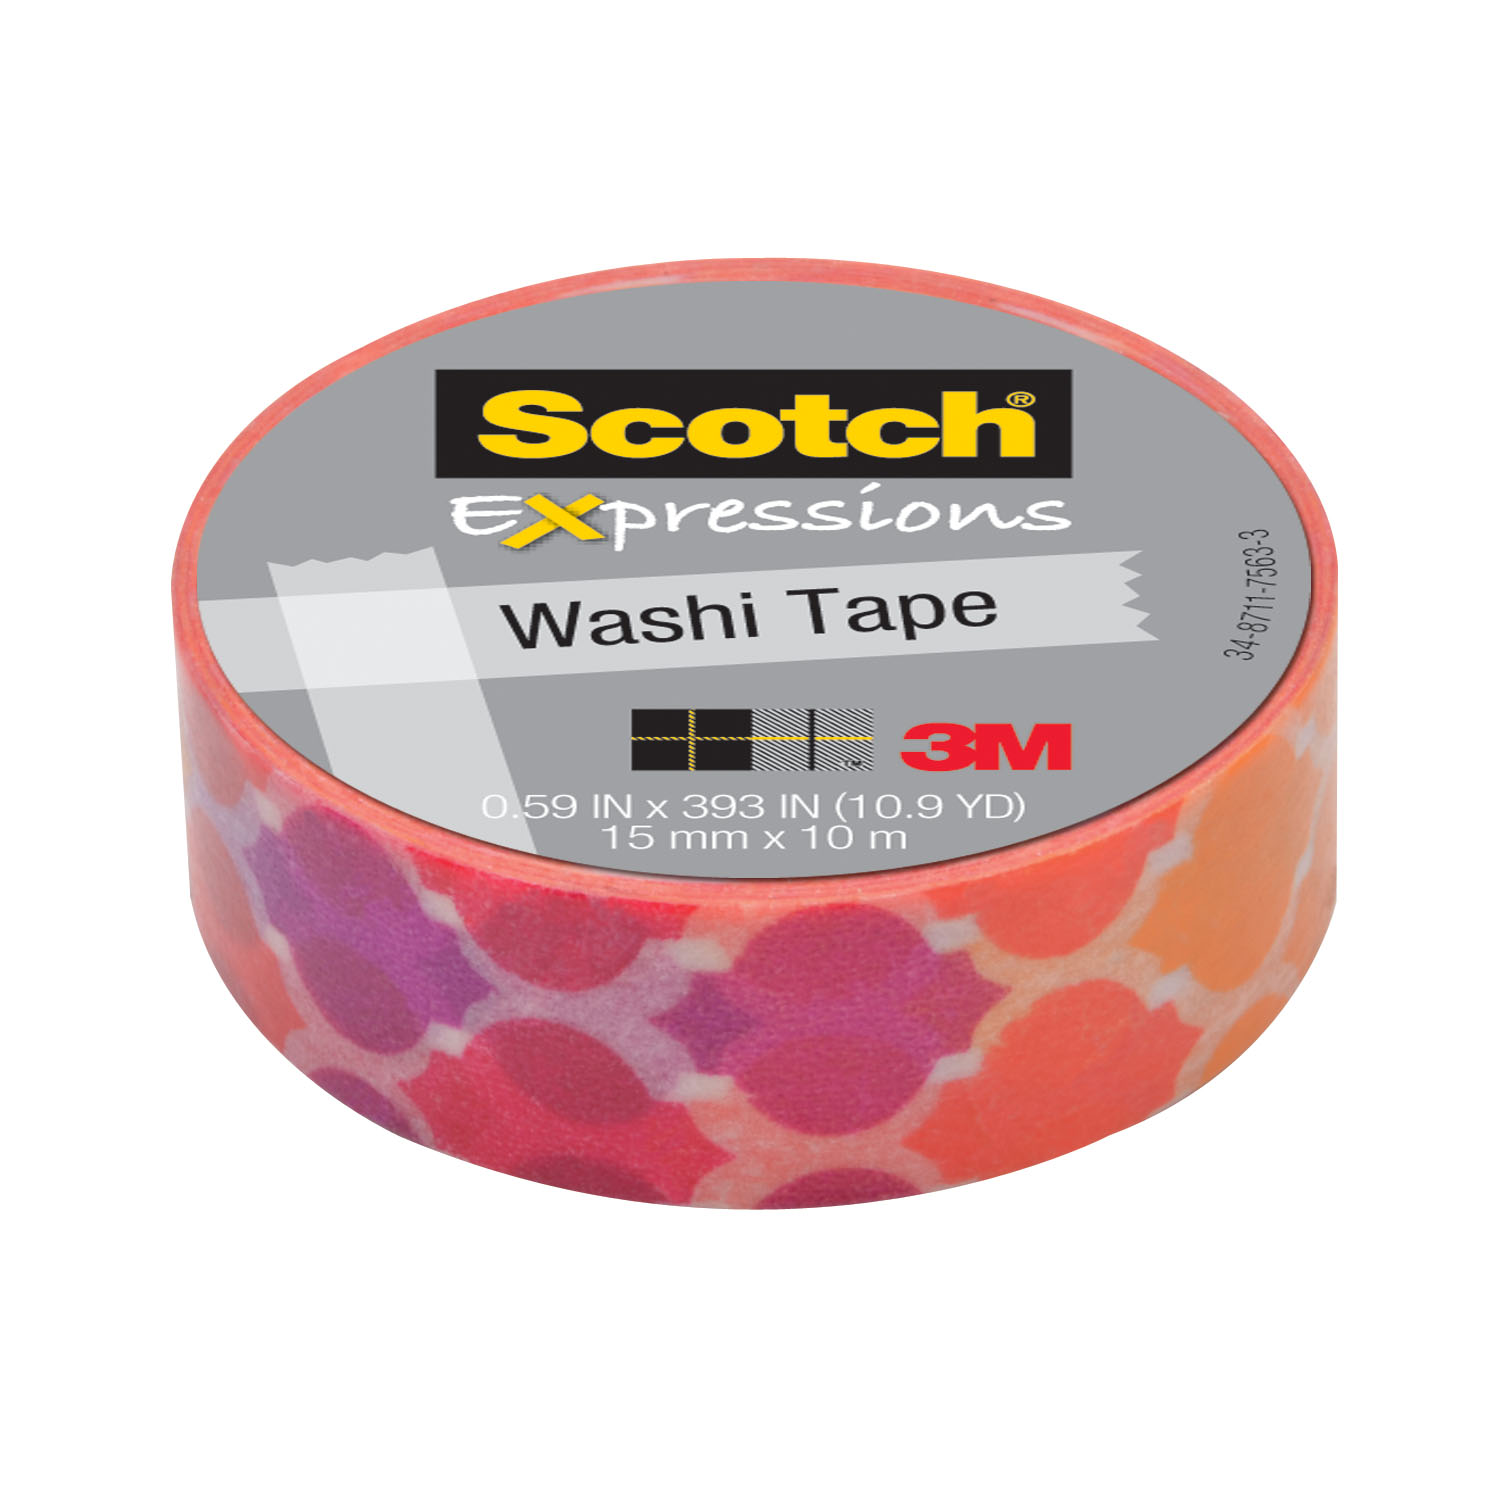 Gold Foil .2 inch Washi Tape